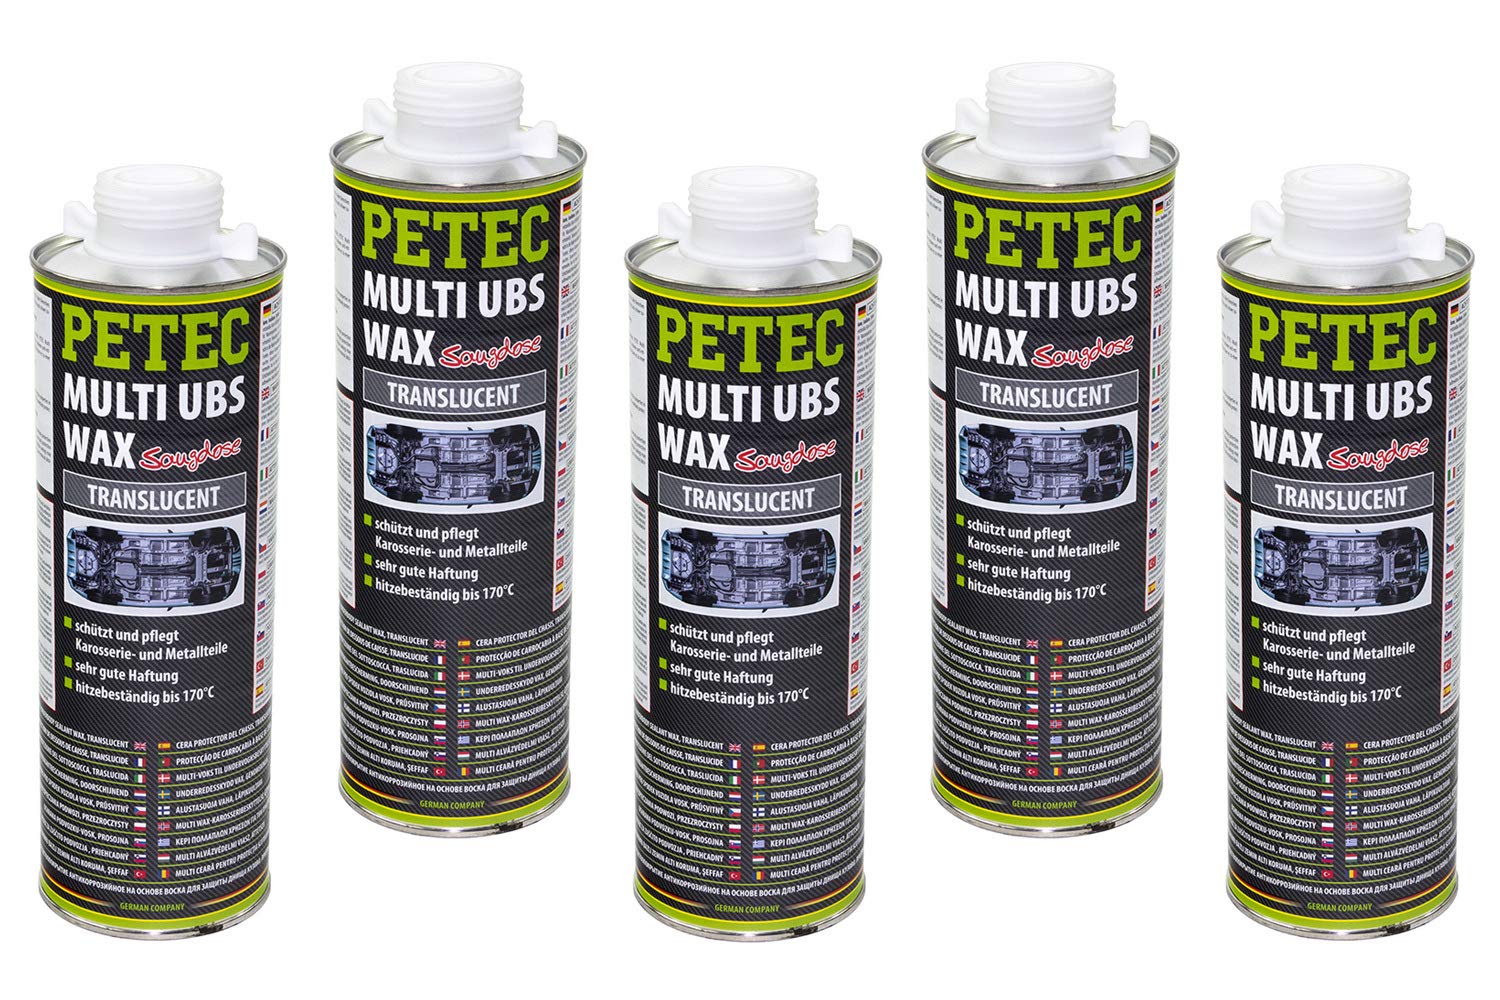 5x 1000 ml Petec UBS Wax Unterbodenschutz auf Wachsbasis Saugdose transparent von Petec